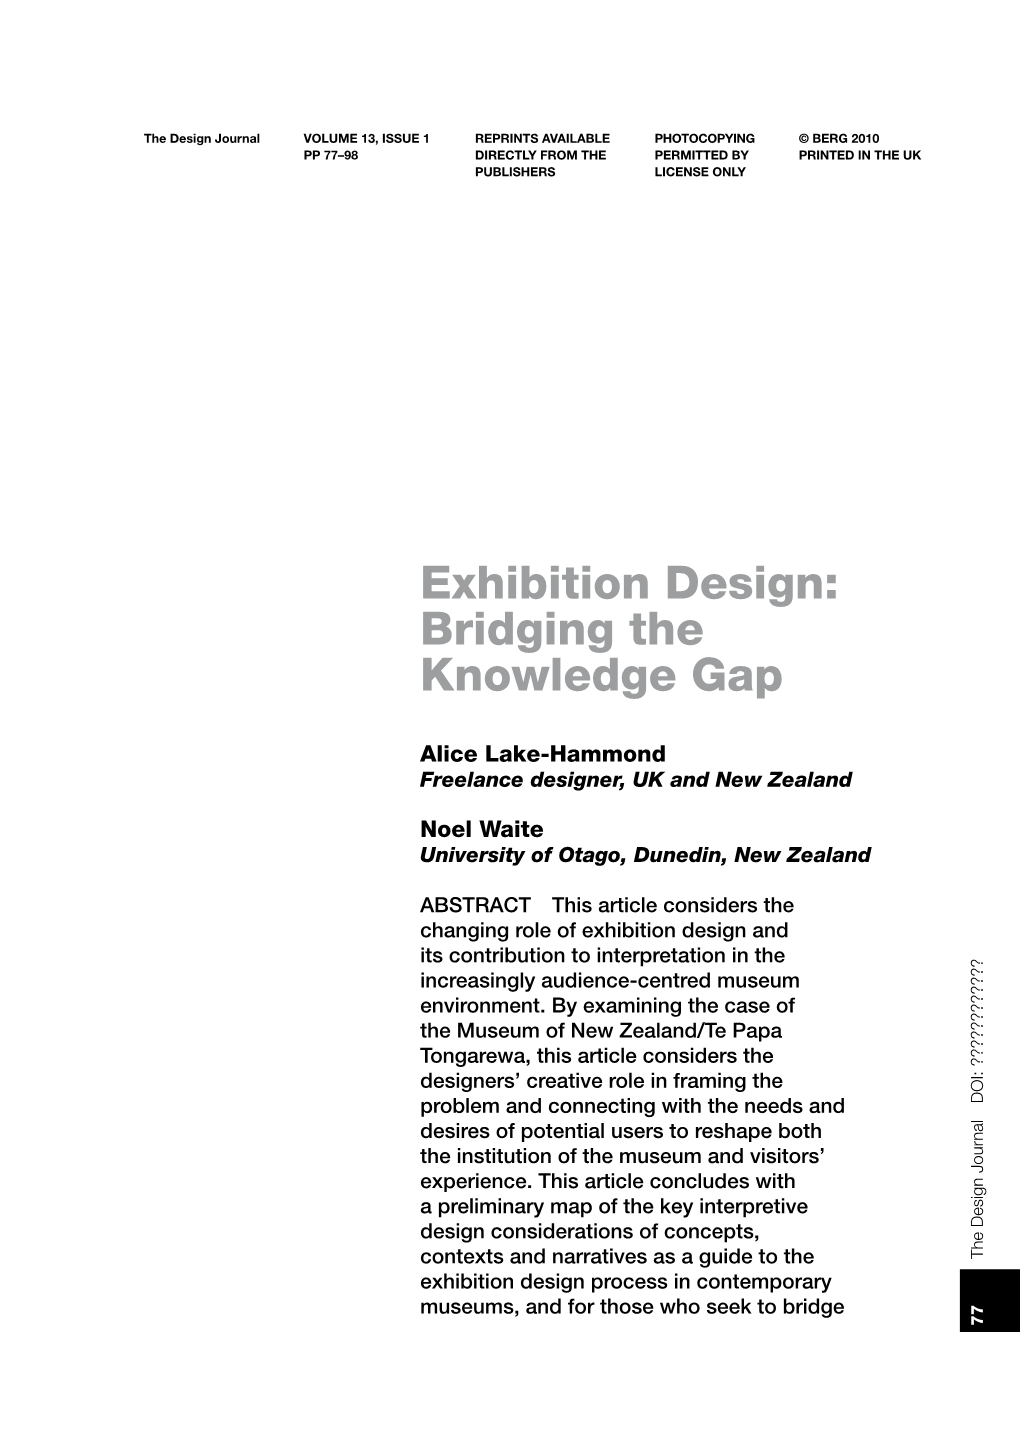 Exhibition Designprocess Incontemporary Contexts Andnarrativesas Aguidetothe Design Considerationsof Concepts, a Preliminary Mapofthekeyinterpretive Experience